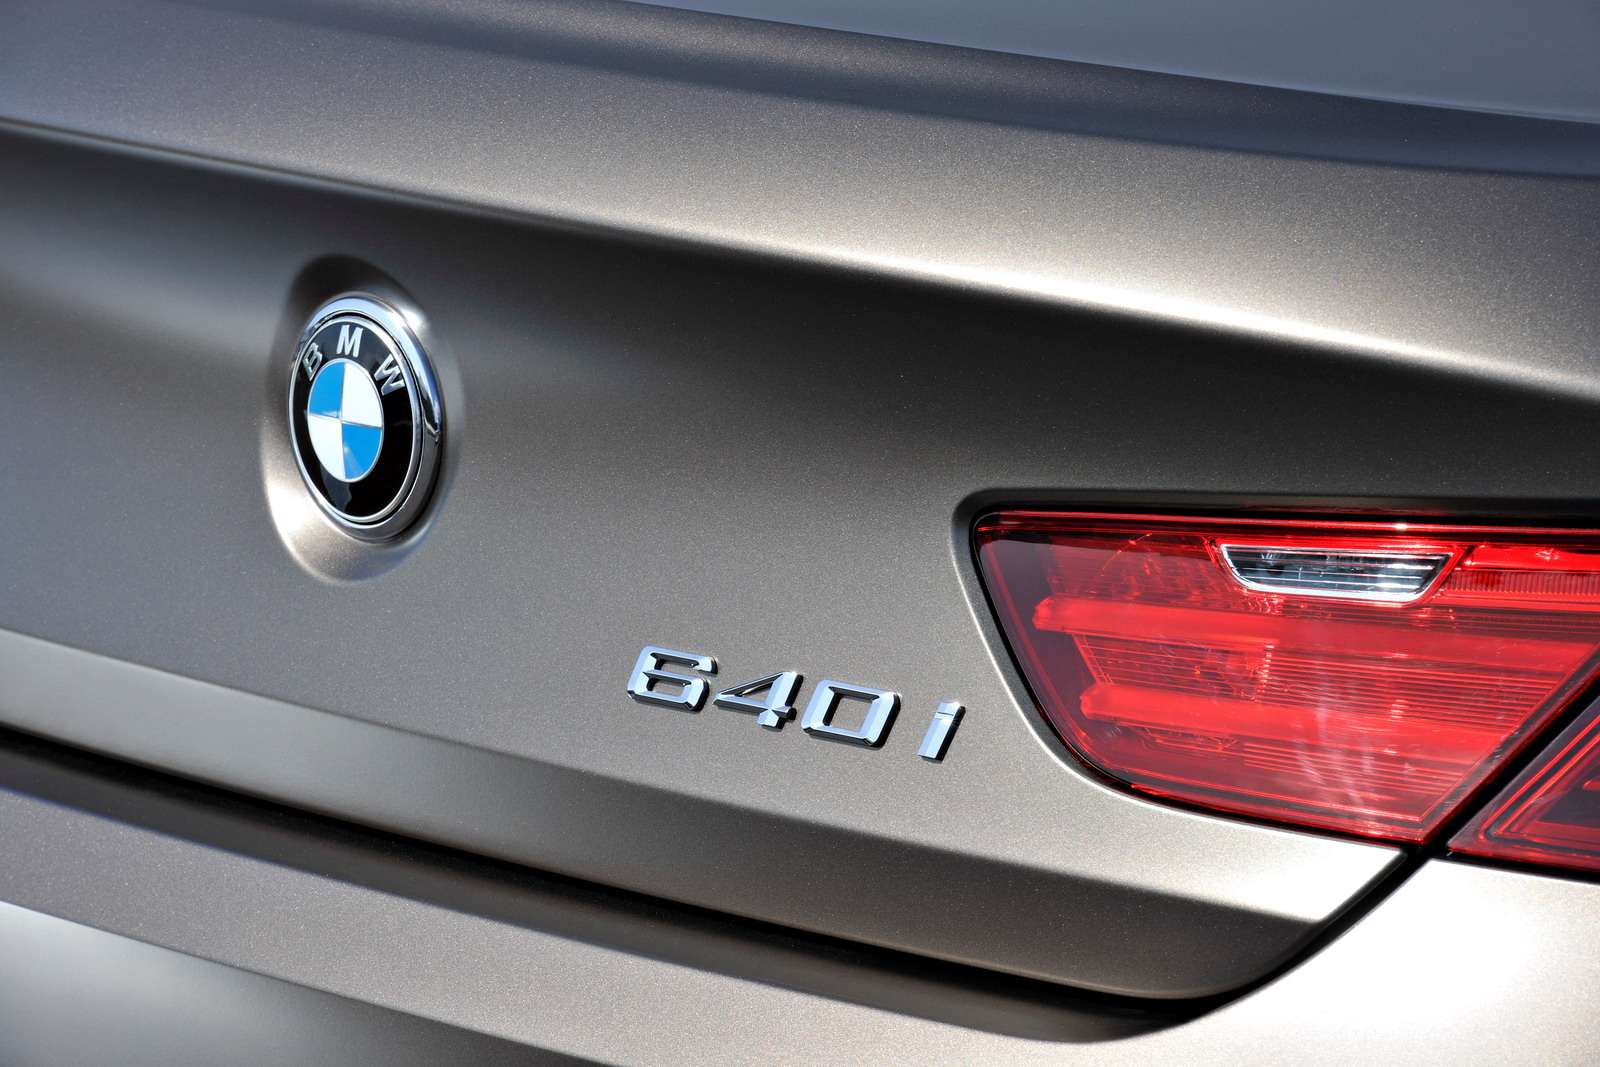 BMW 6 Gran Coupe fot oficjalnie grudzien 2011